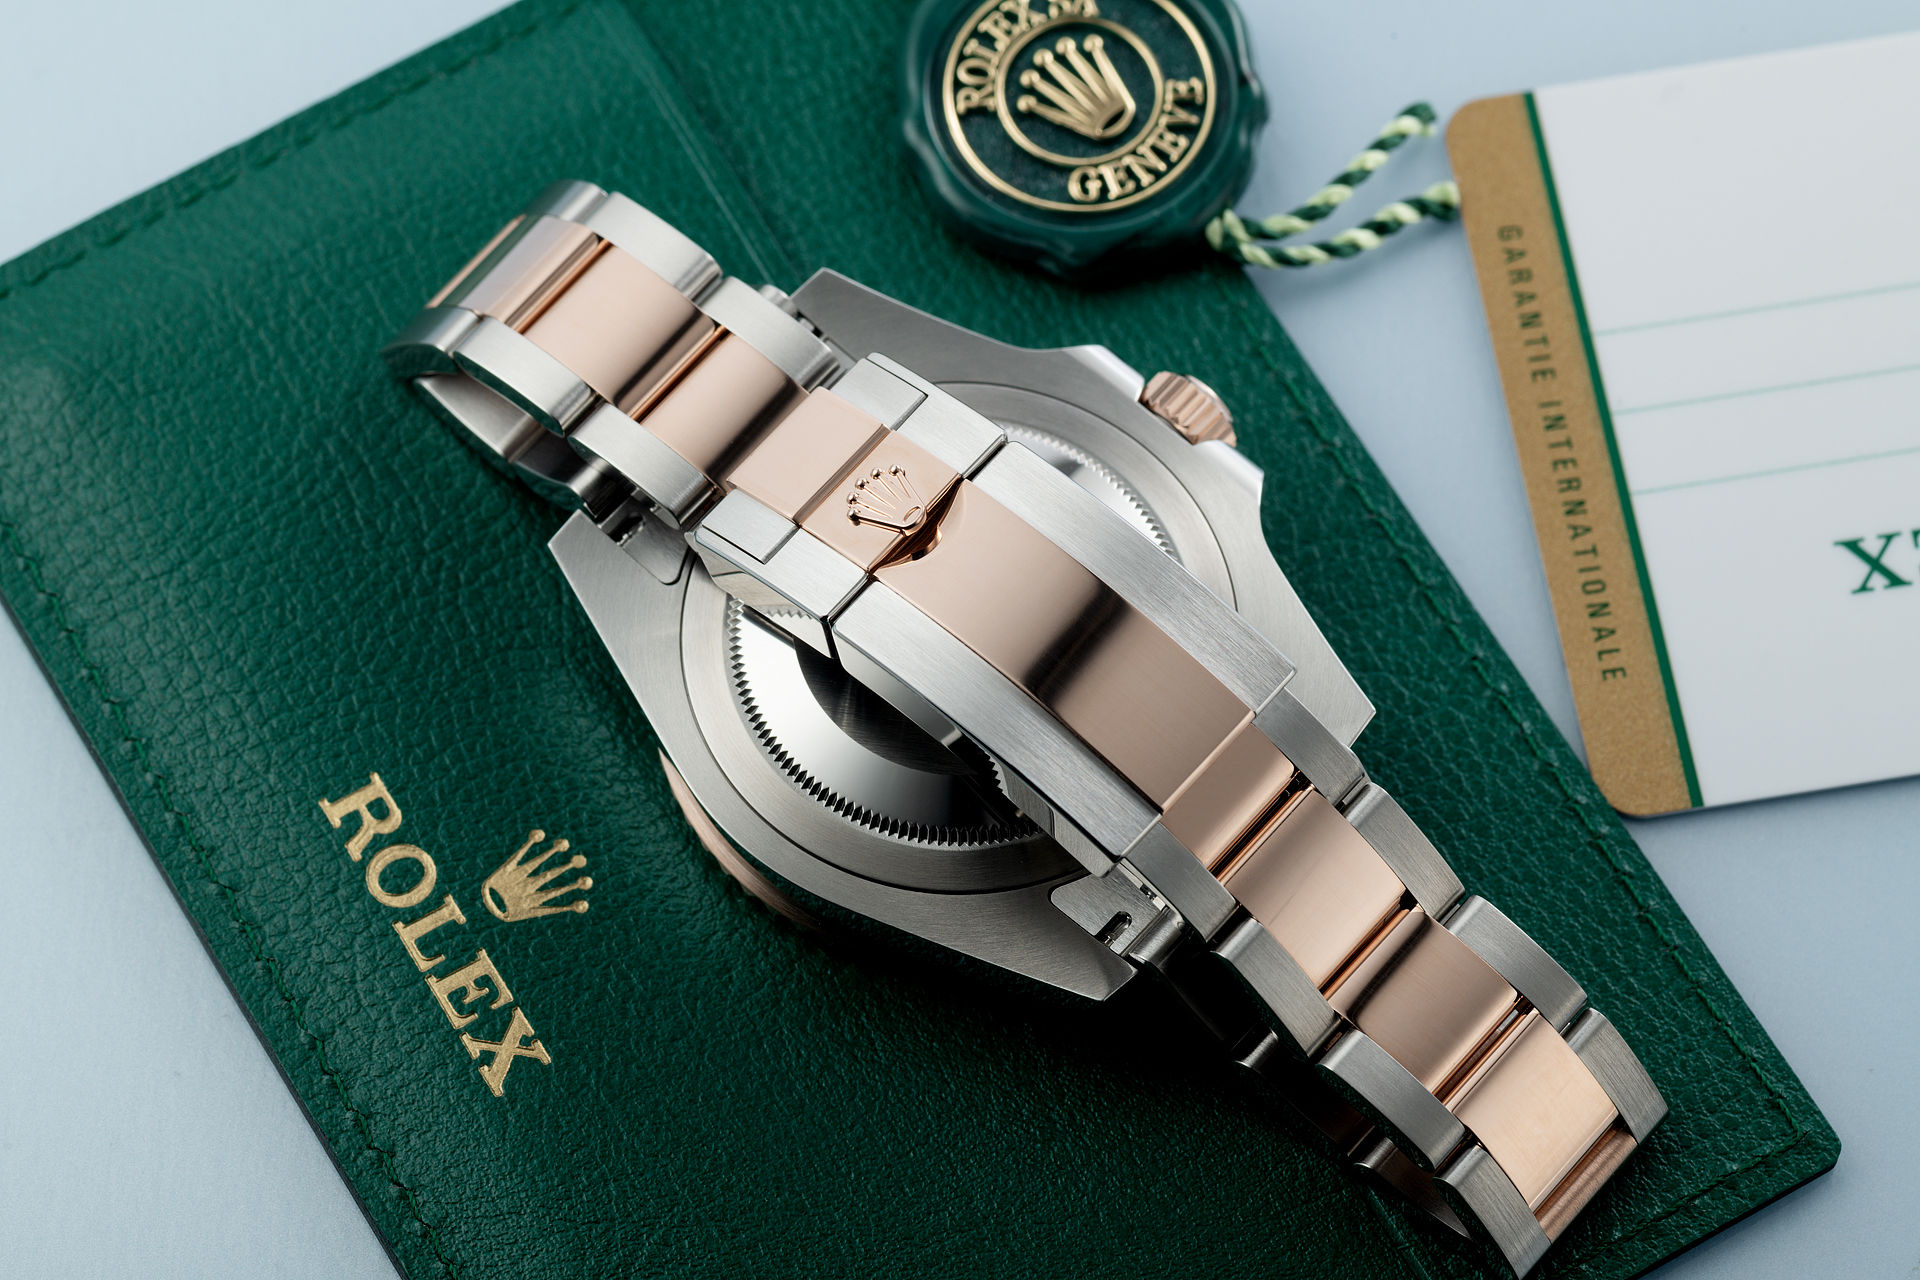 ref 126711CHNR | Brand New 5 Year Rolex Warranty | Rolex GMT-Master II